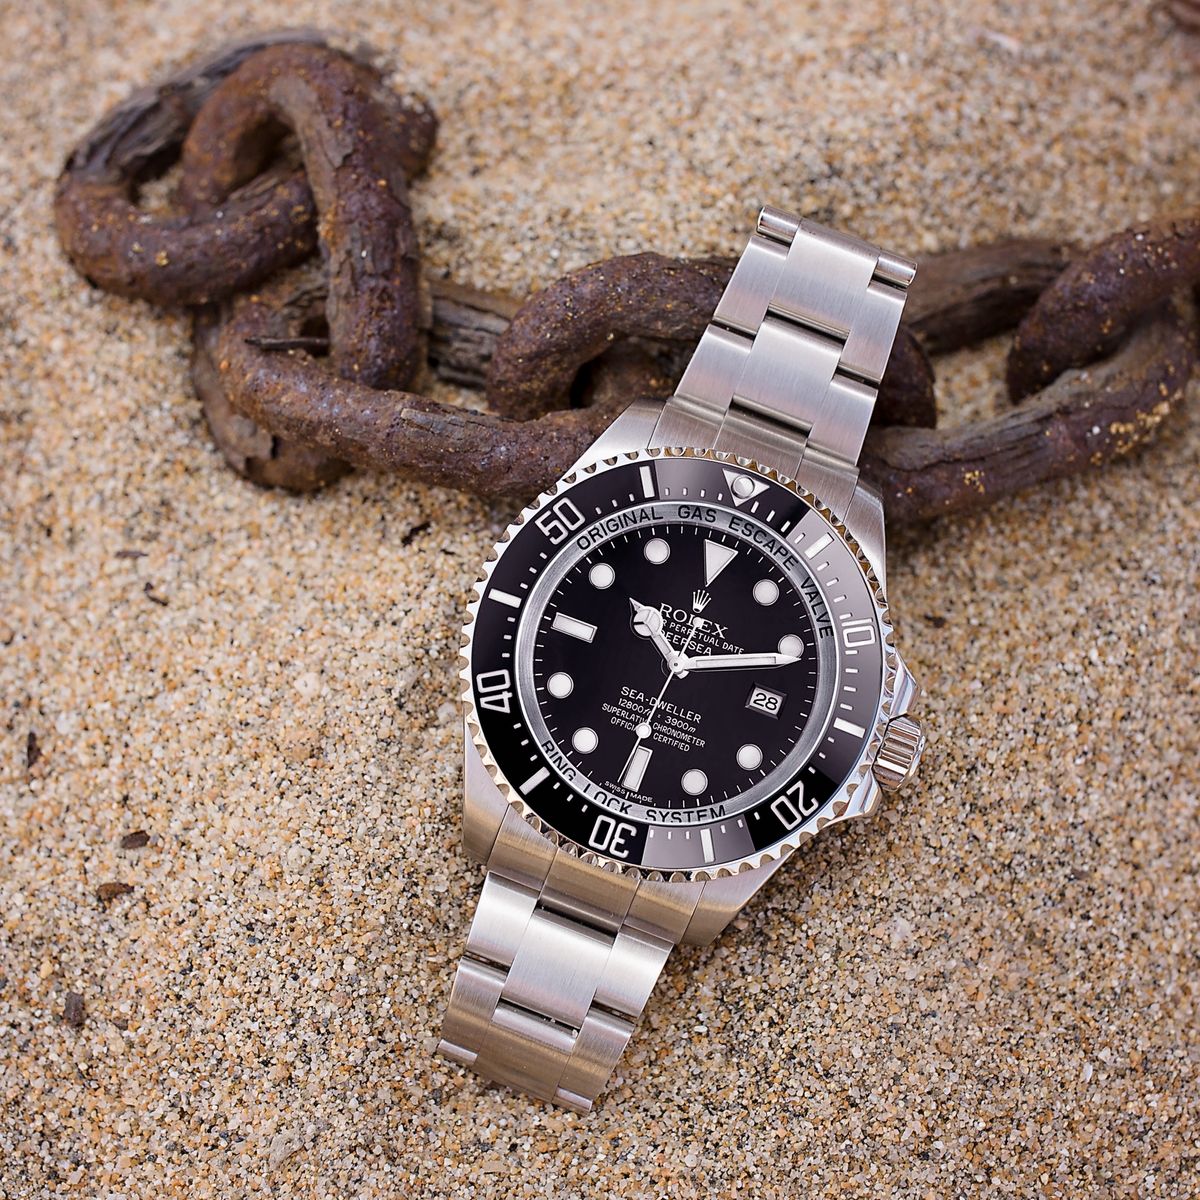 Rolex Sea-Dweller vs Deepsea vs Submariner Diving watches Comparison guide